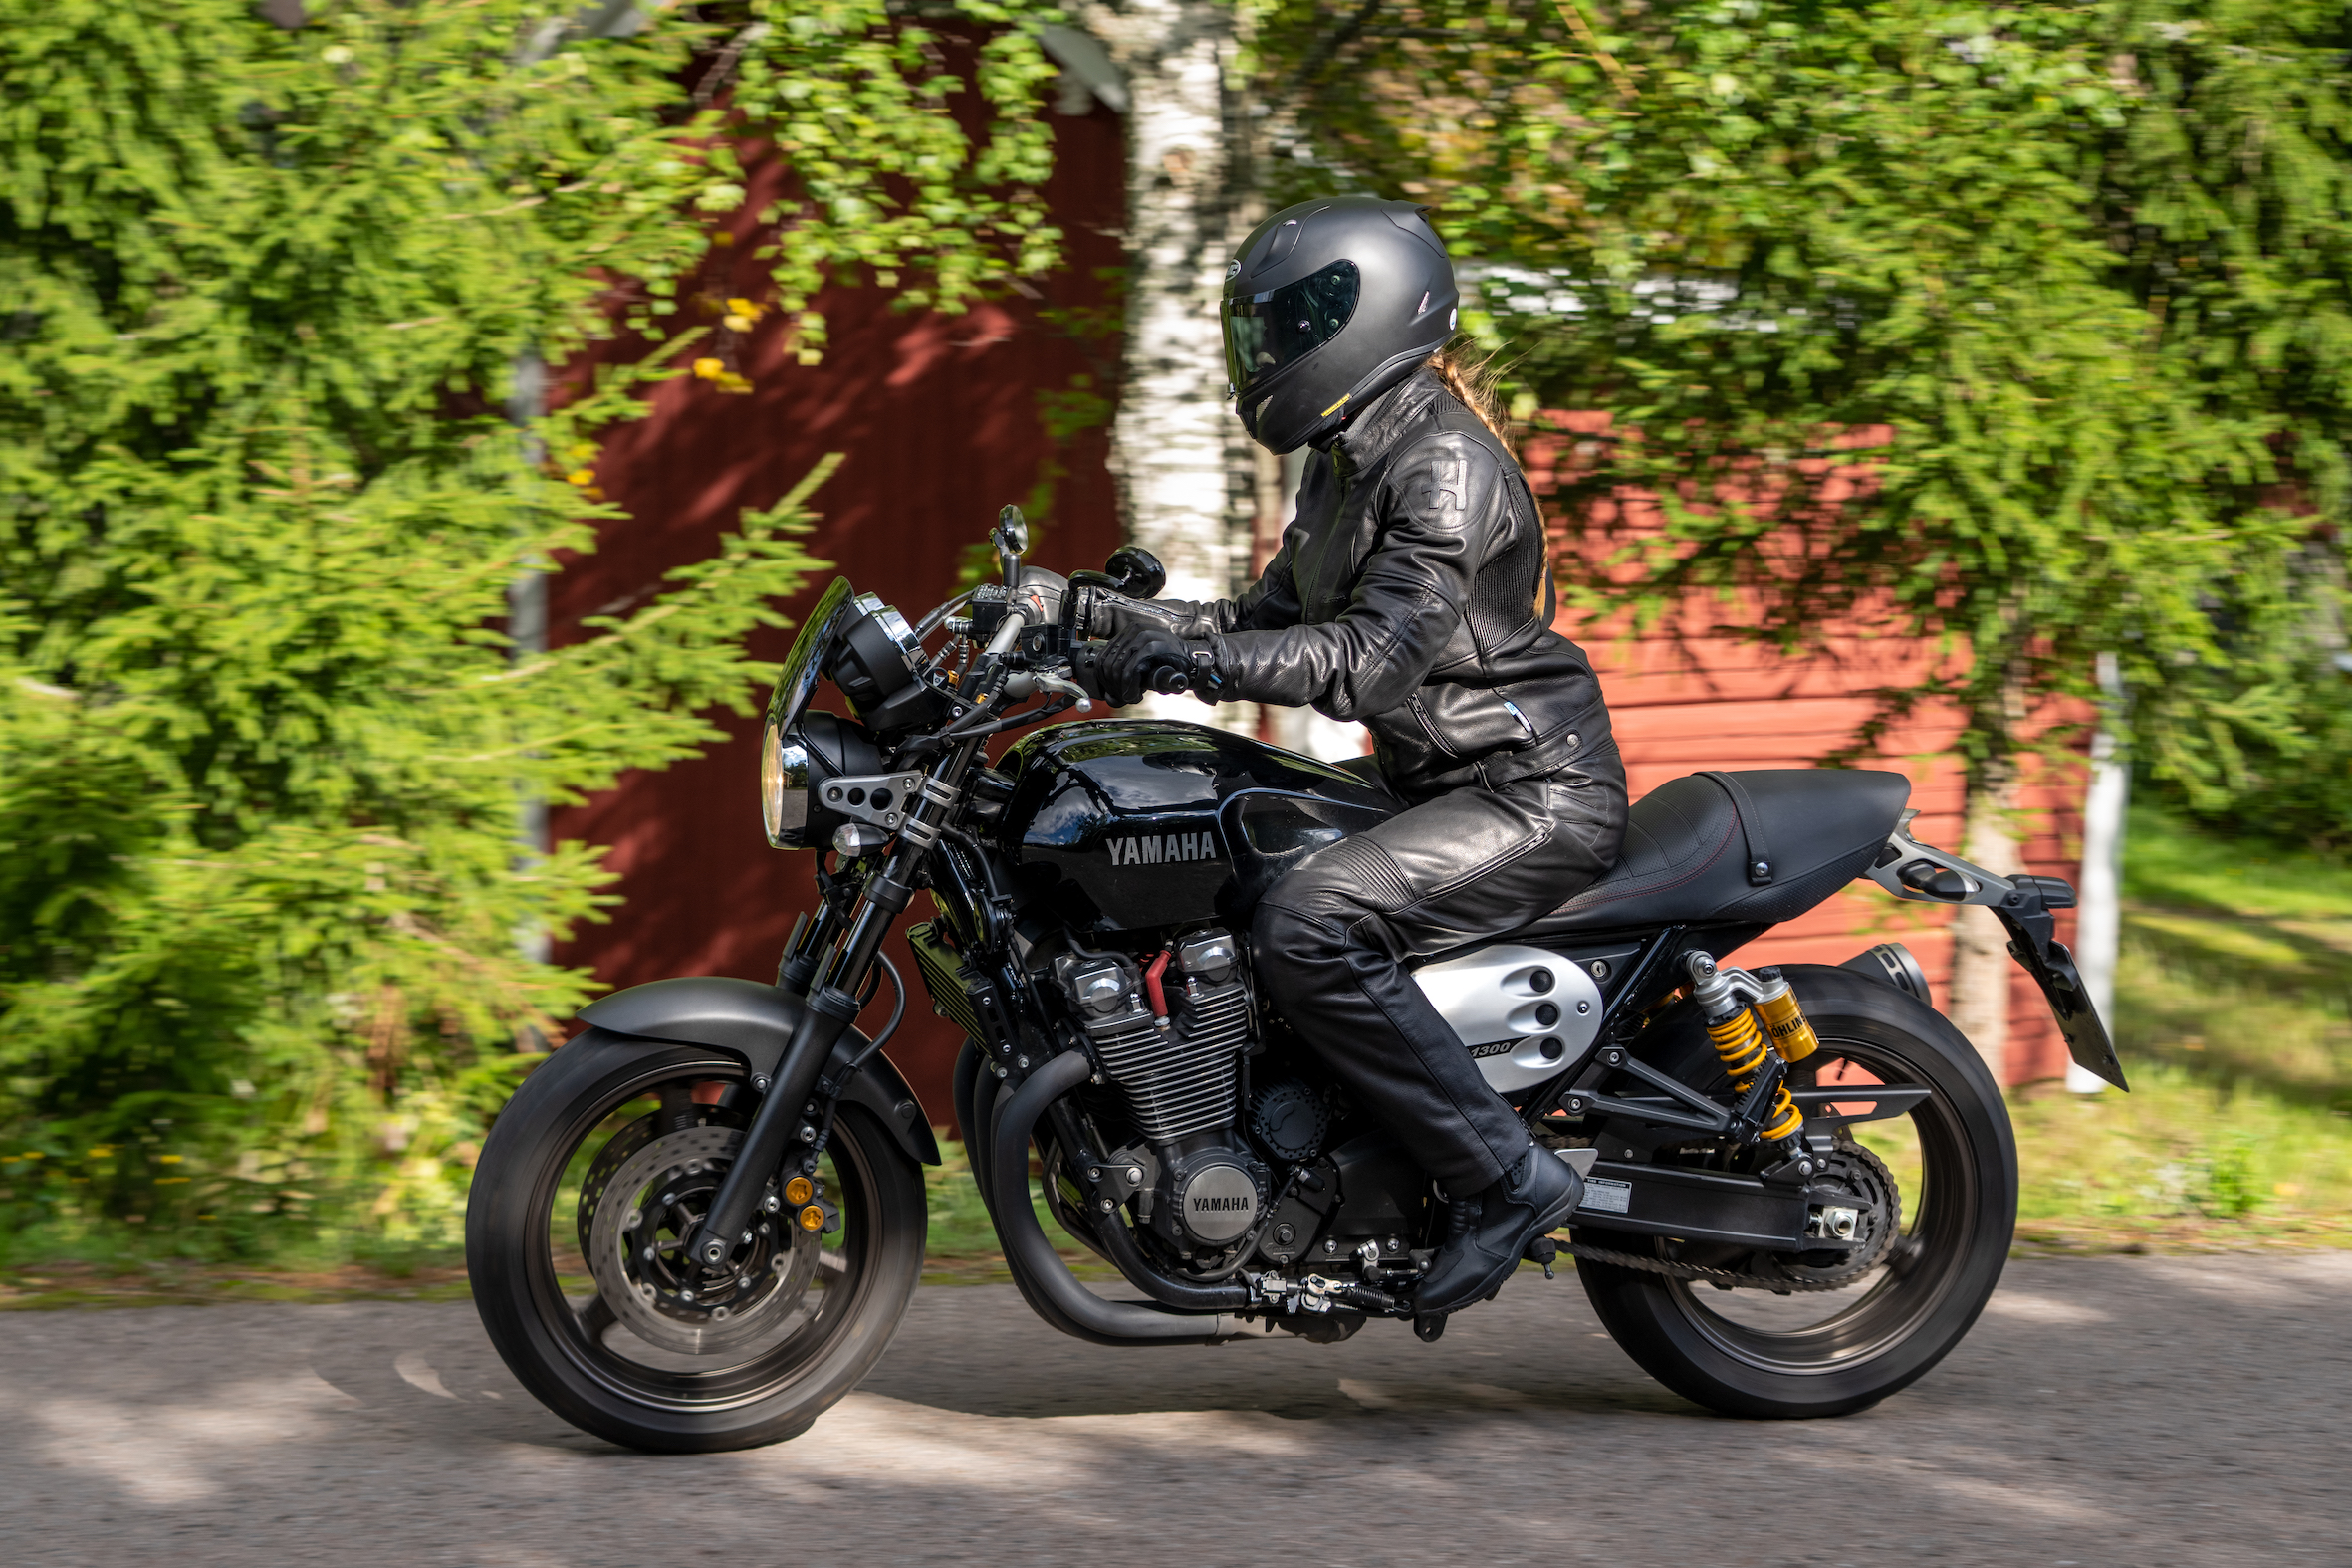 Woman Rider in Halvarssons Gear